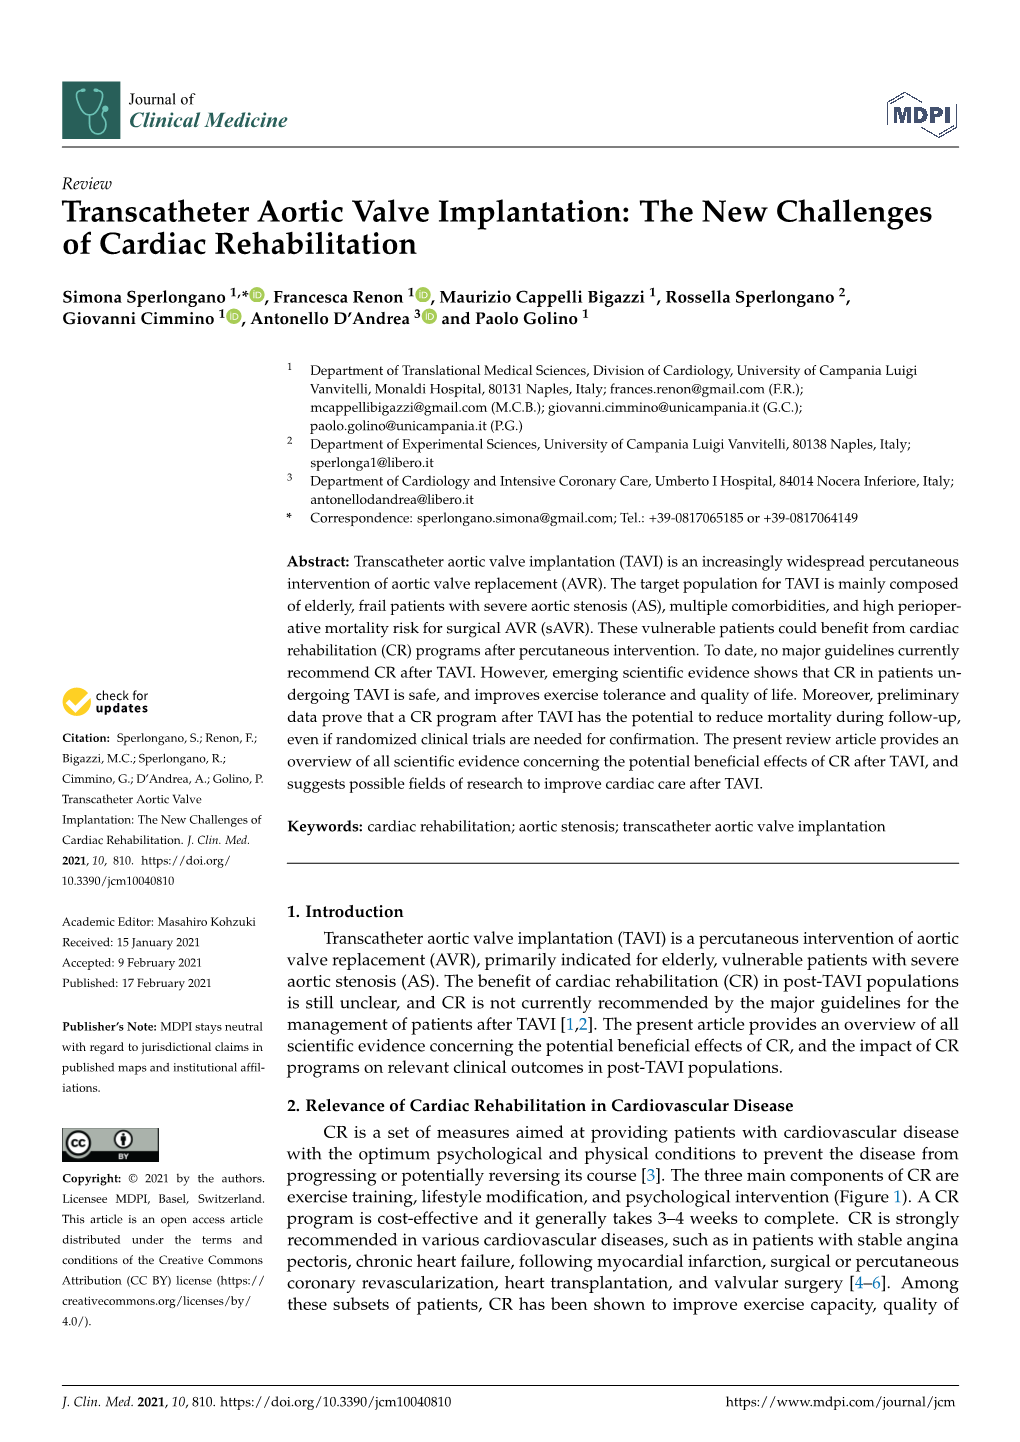 Transcatheter Aortic Valve Implantation: the New Challenges of Cardiac Rehabilitation